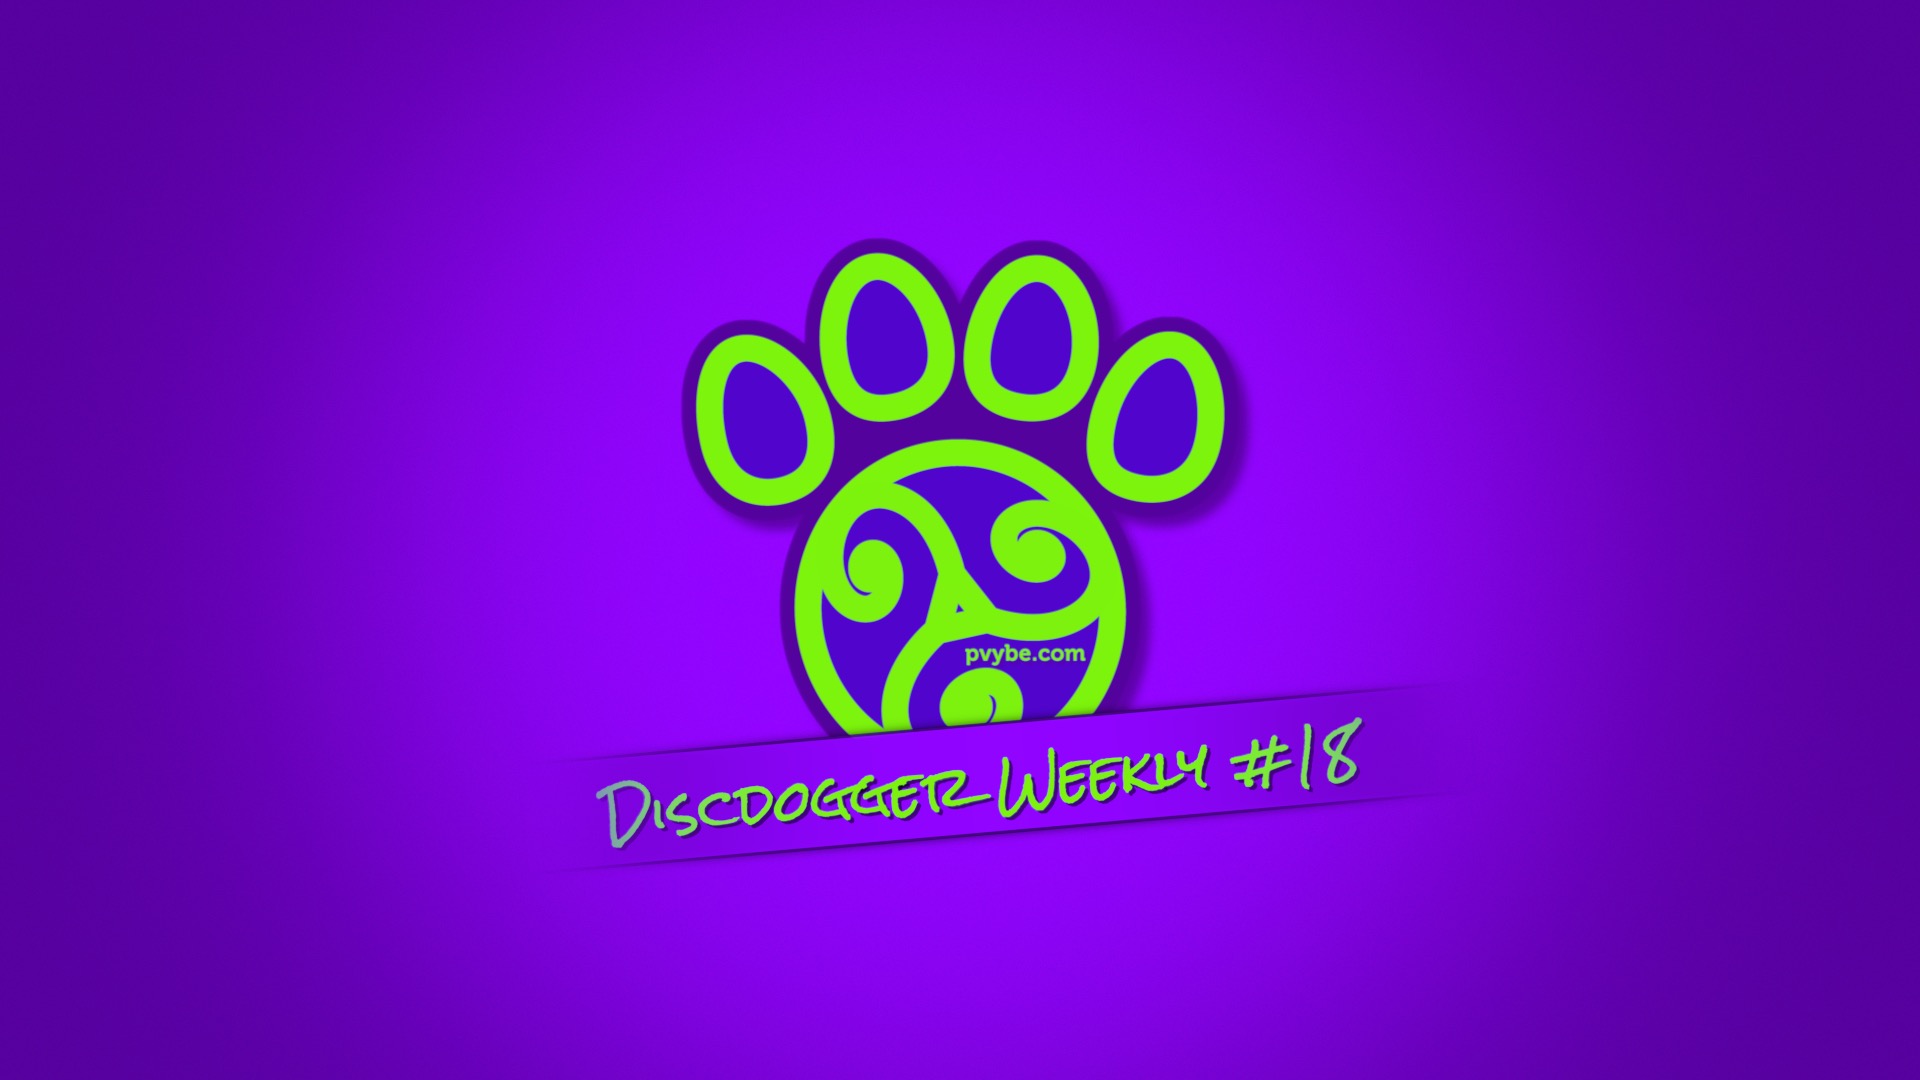 discdogger weekly #18